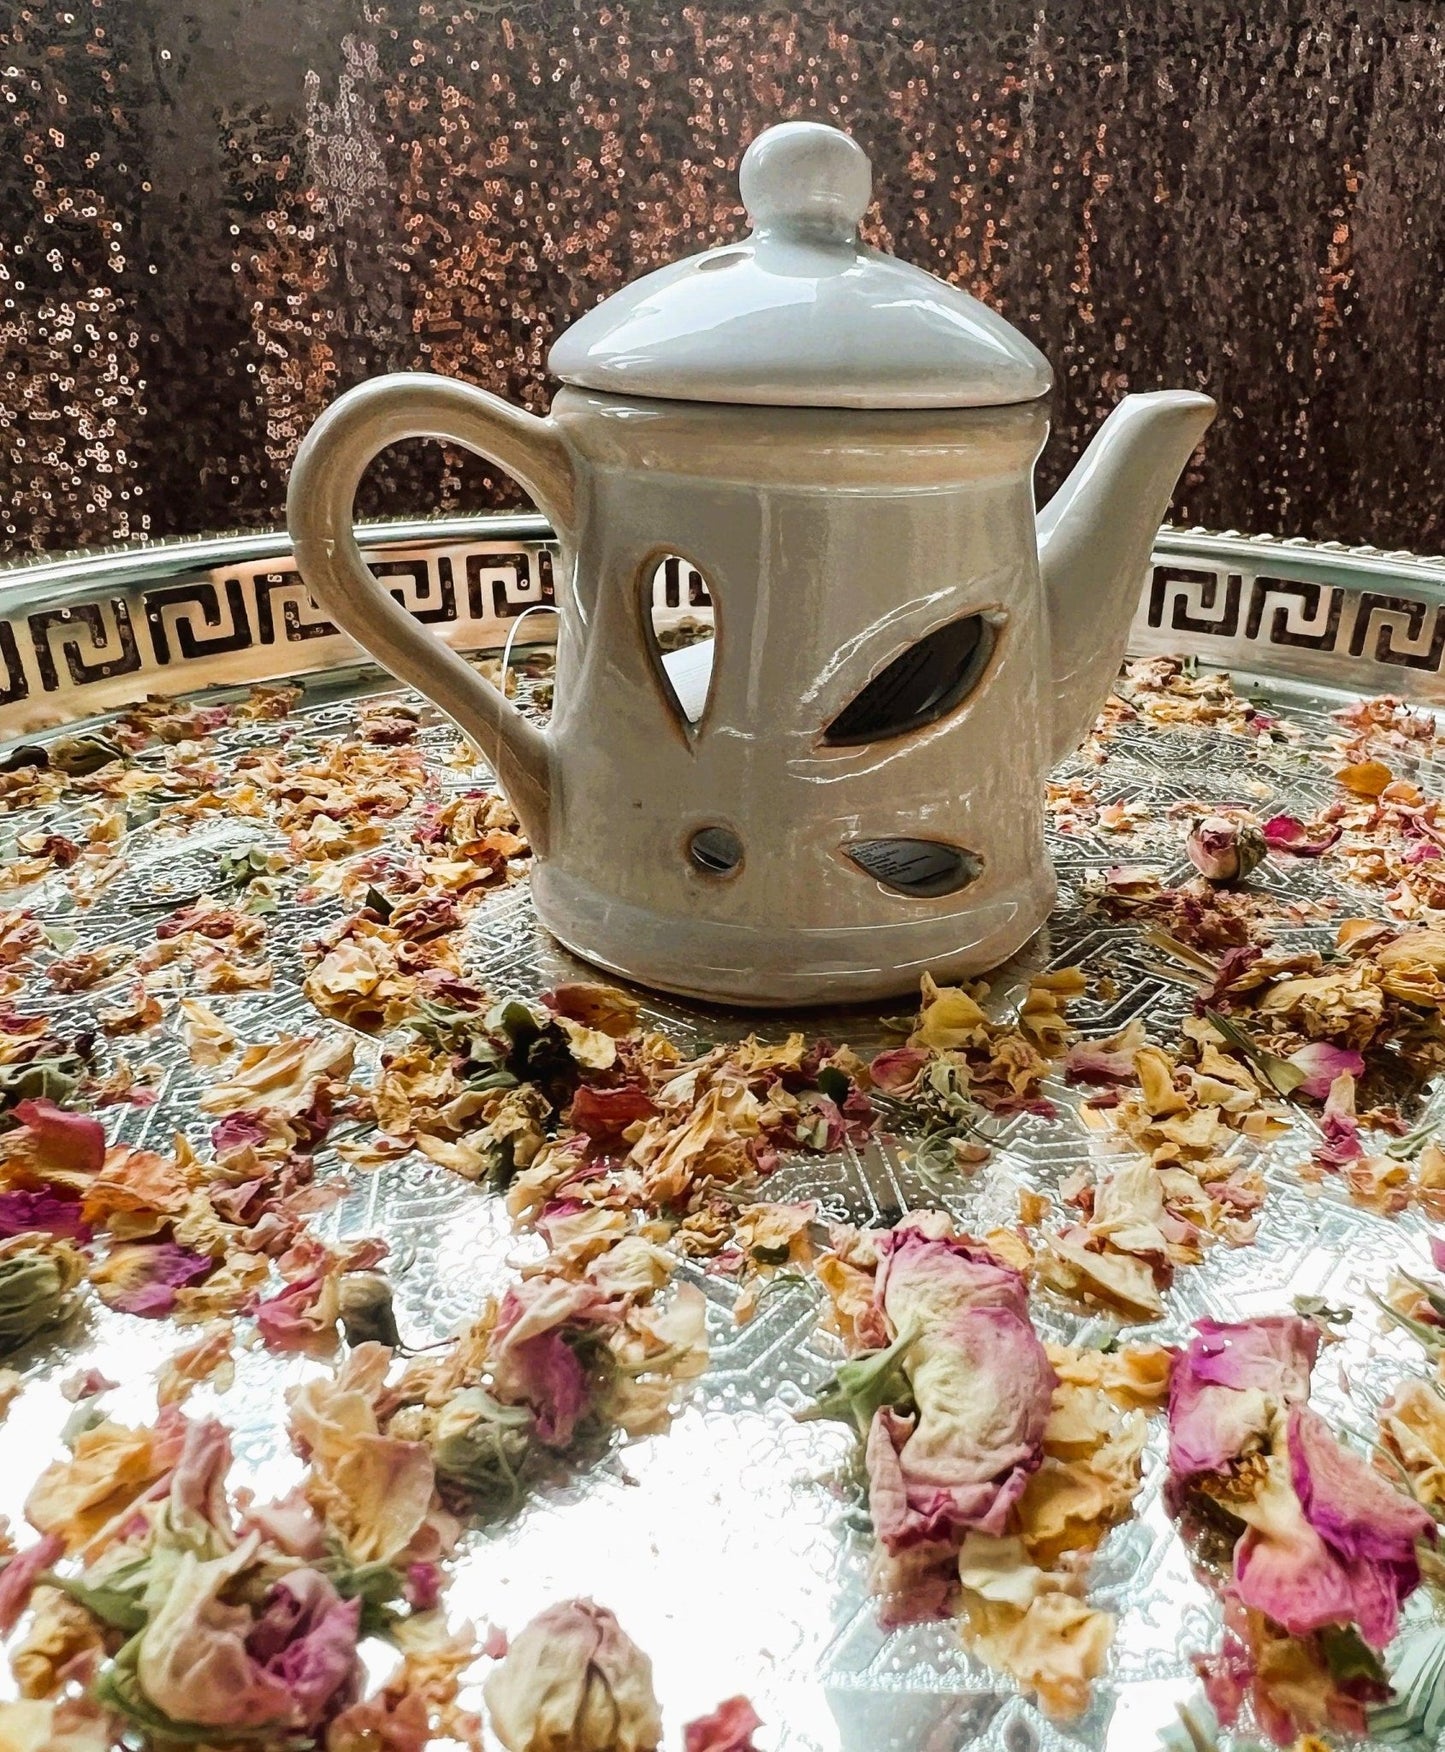 Ceramic Teapot Wax Burner & Essential Oil Diffuser with Lid - Amazighrose